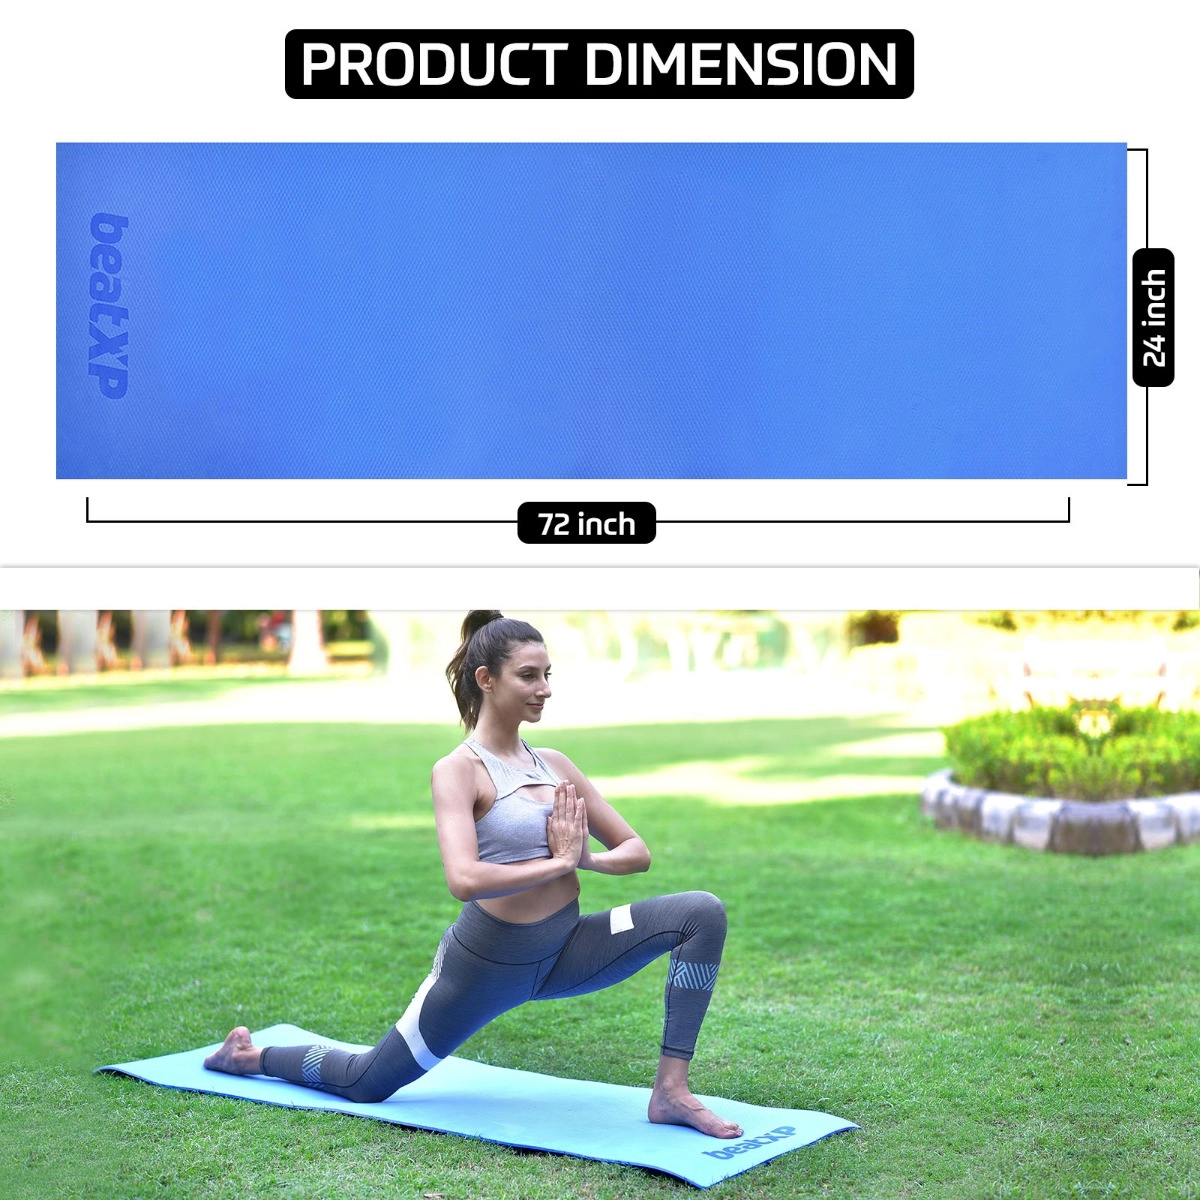 Girl model using beatXP Yoga Mat - Blue, Product Dimension 